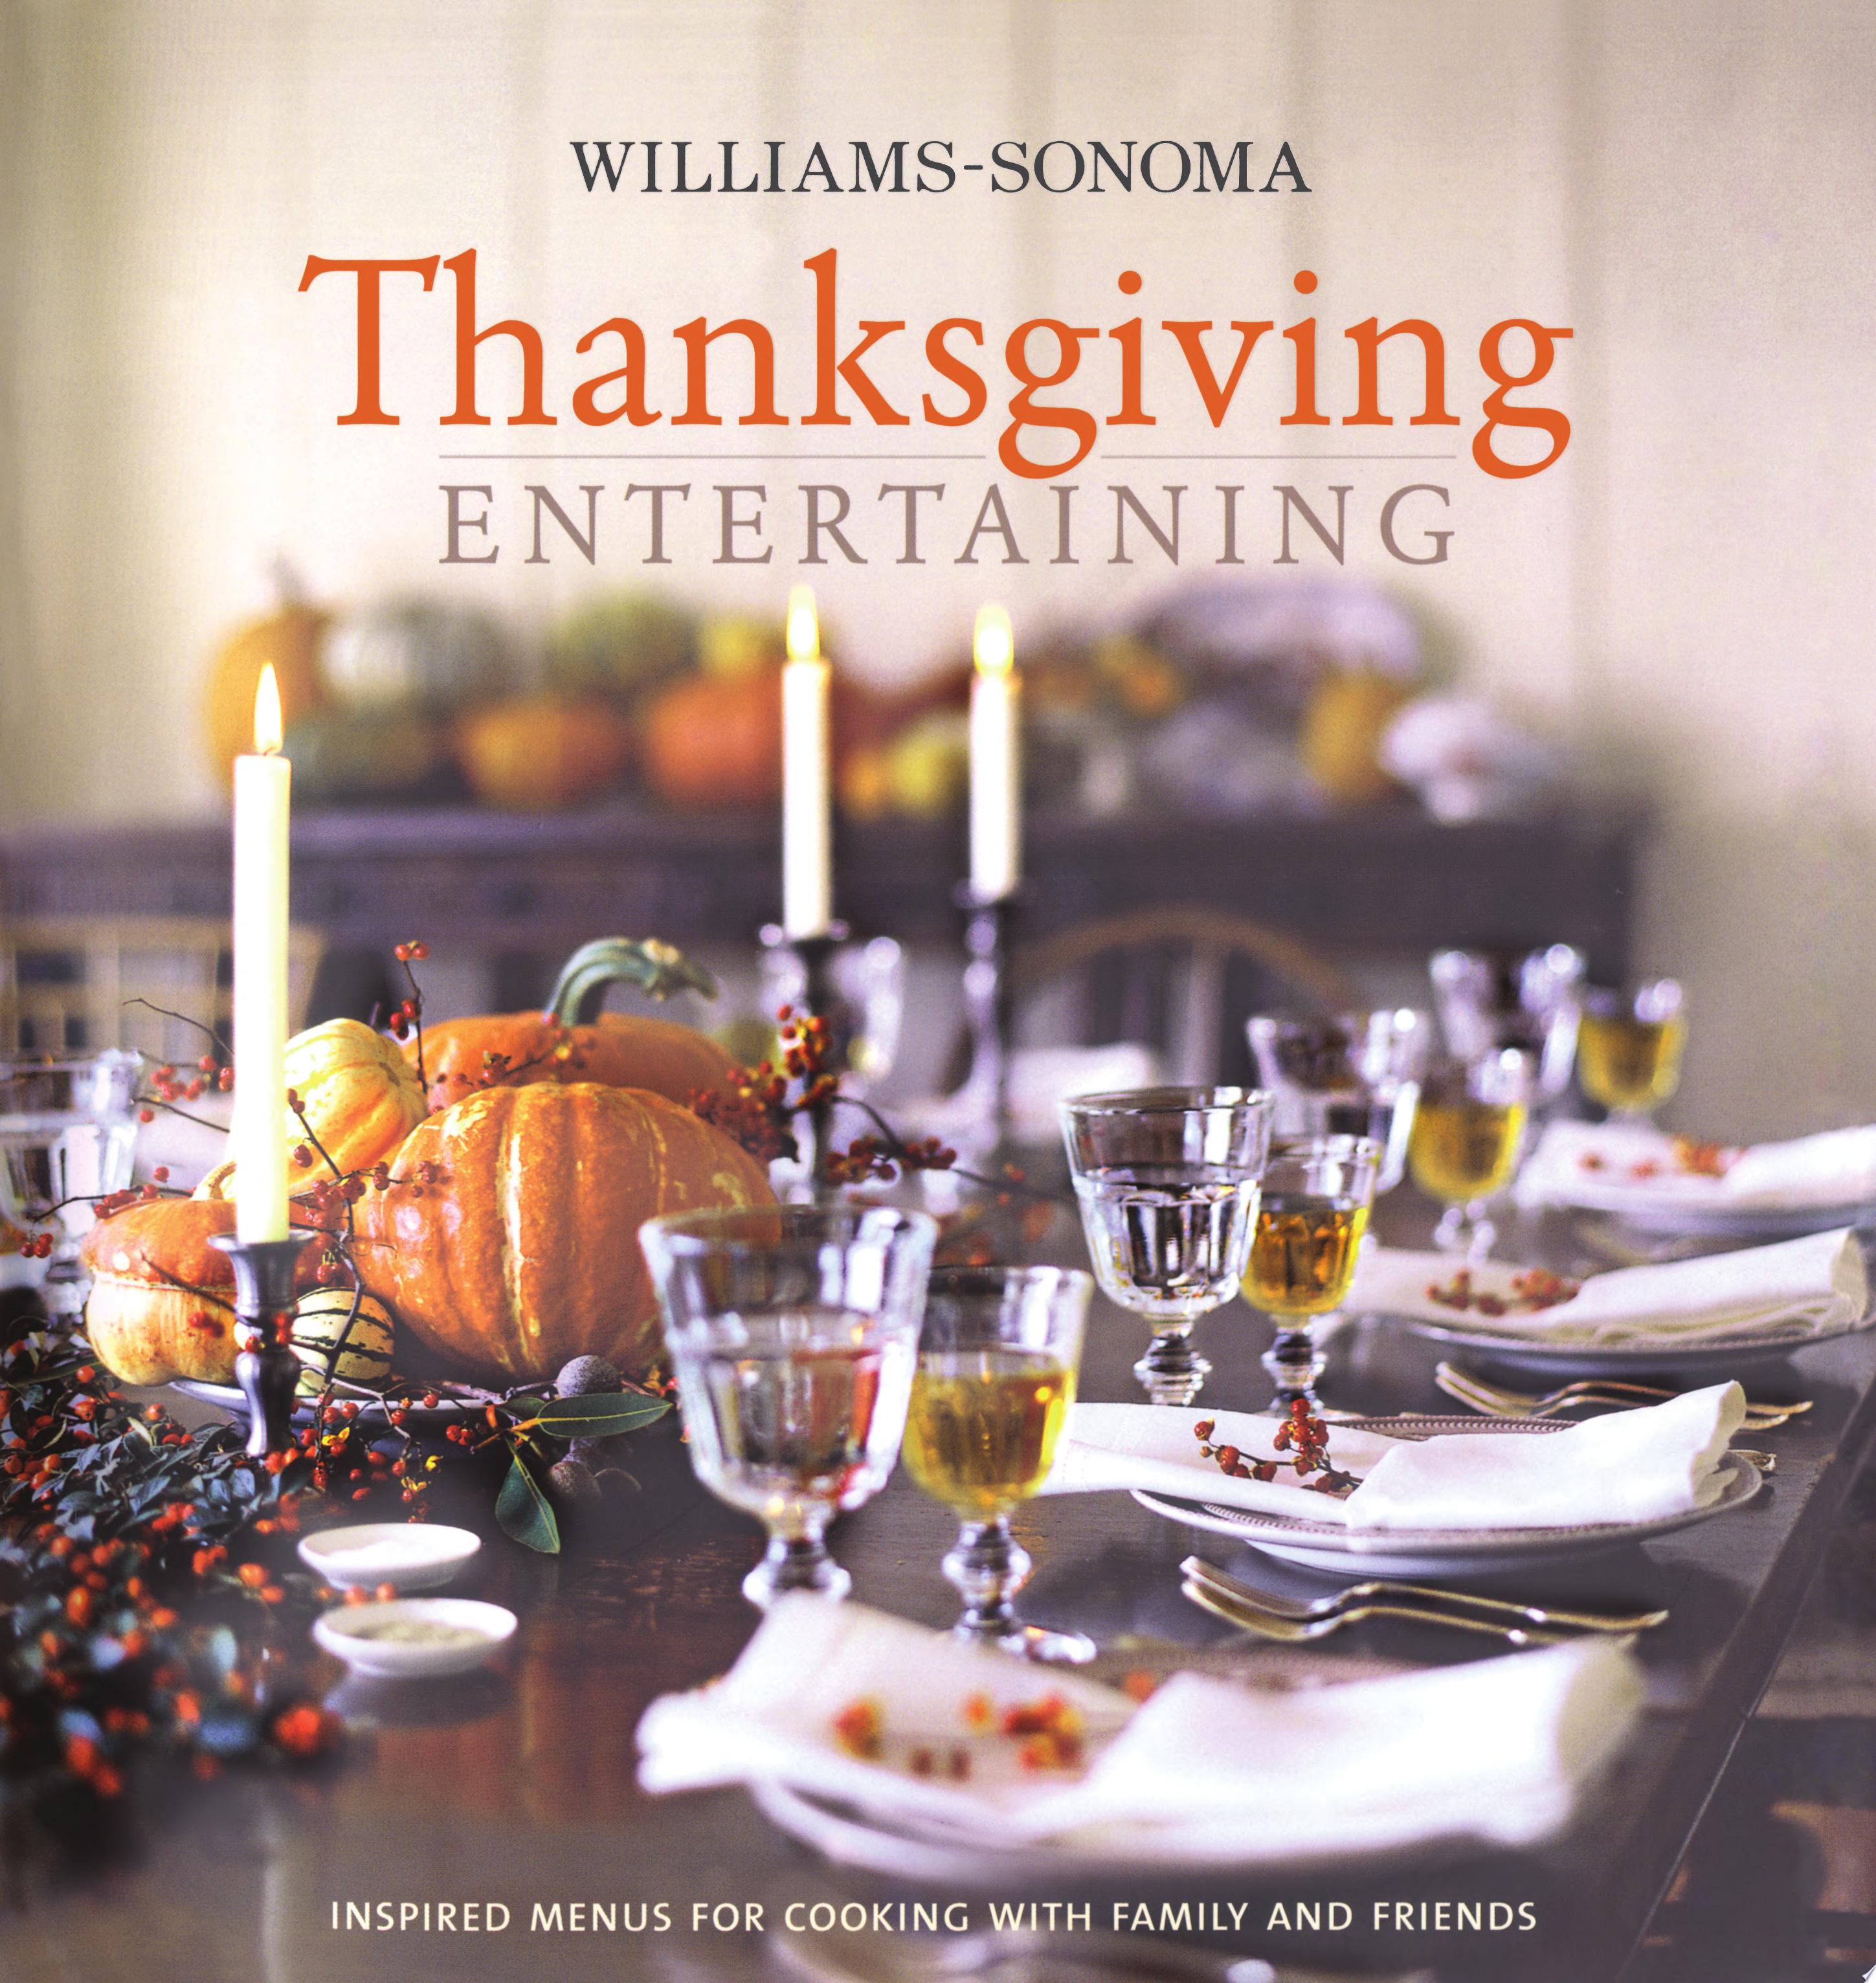 Image for "Williams-Sonoma Entertaining: Thanksgiving Entertaining"